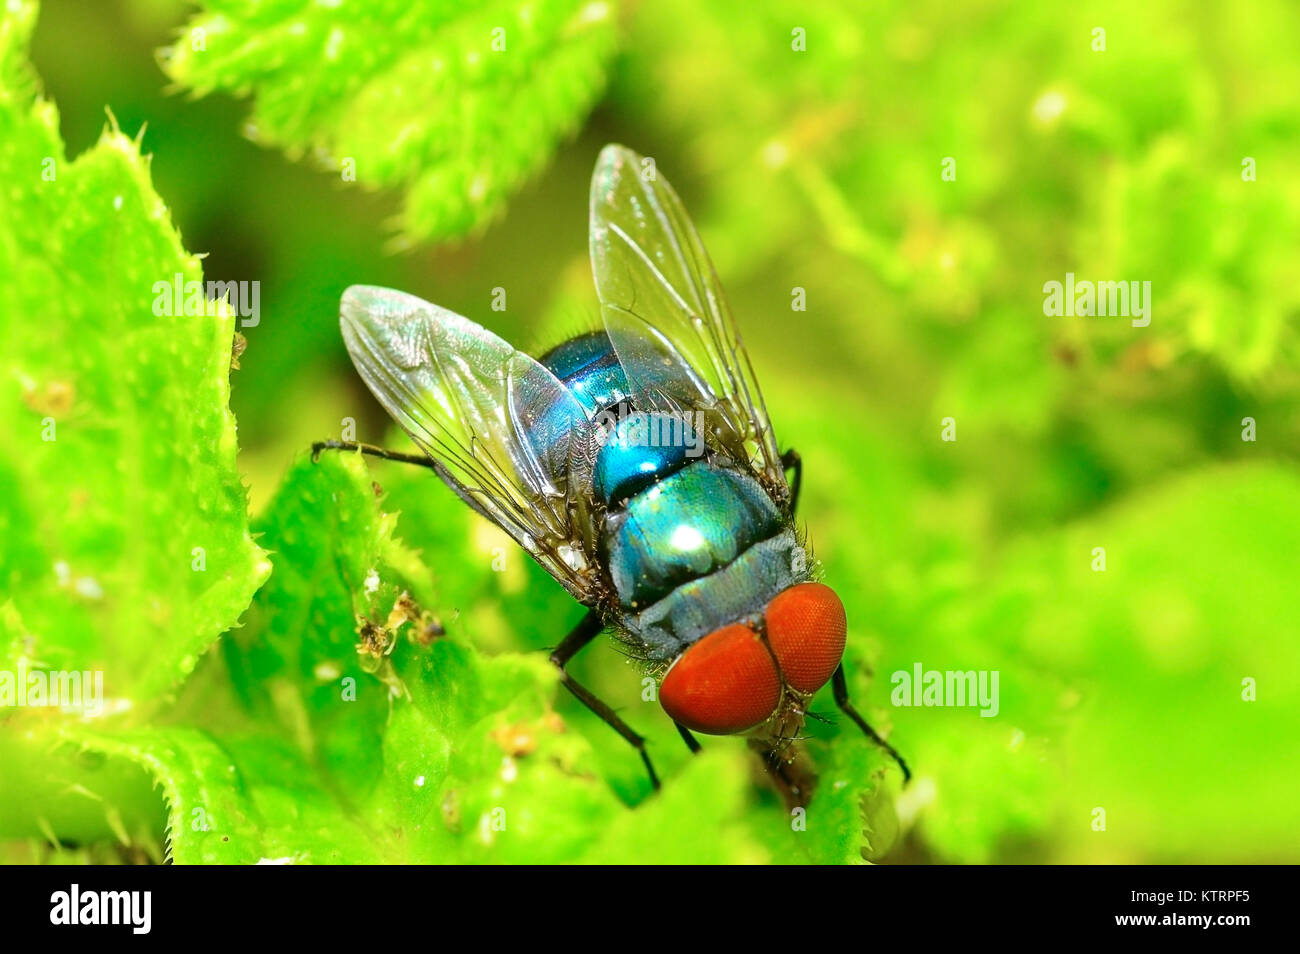 Common green bottle flies near Pune, Maharashtra Stock Photo